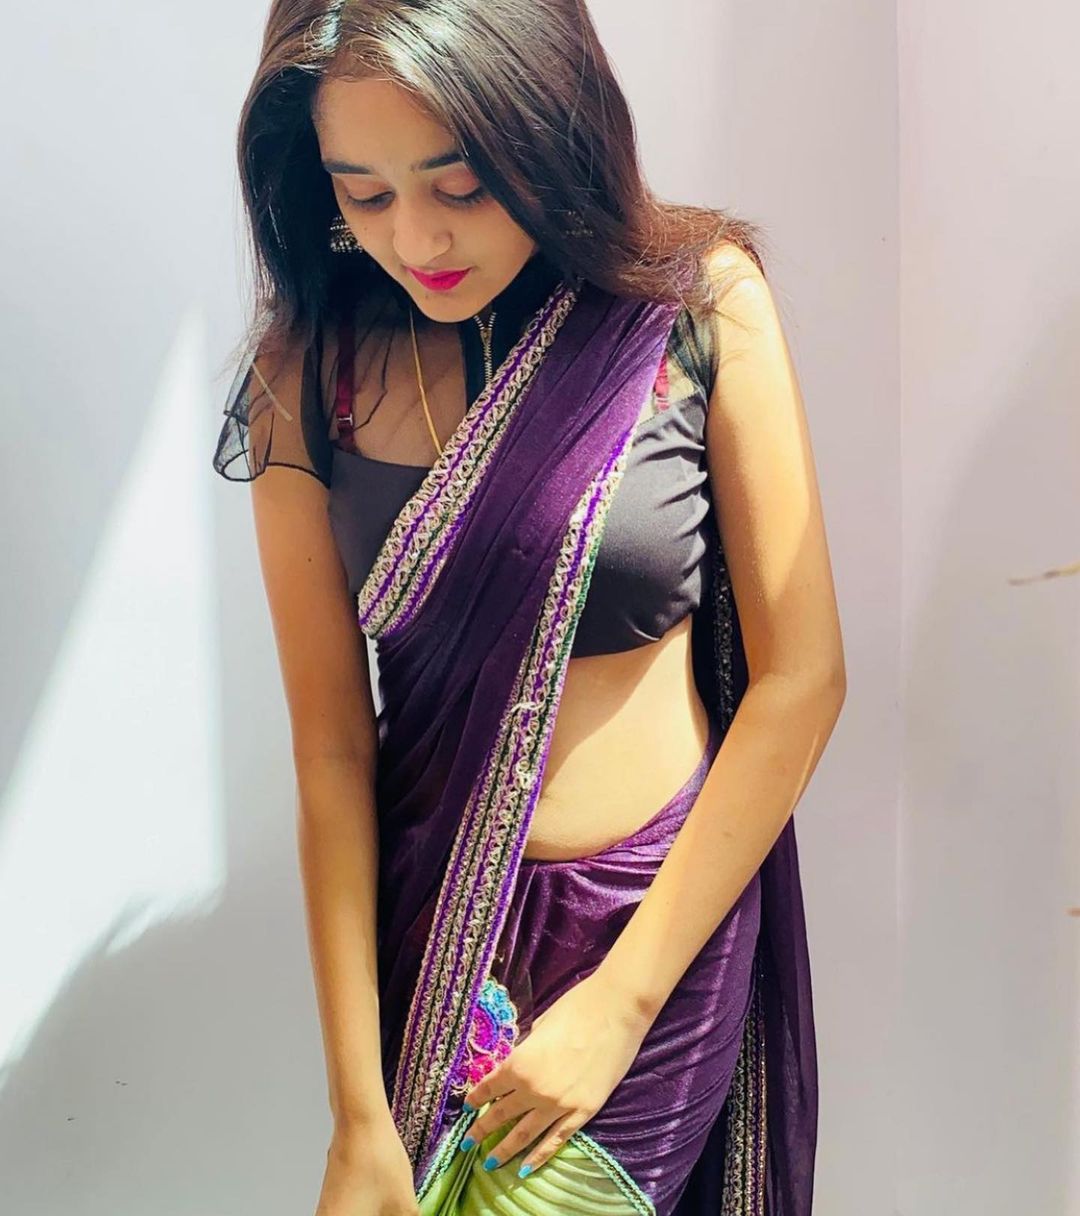 Bindass kavya purple saree hot sexy escorts girl sohanisharma